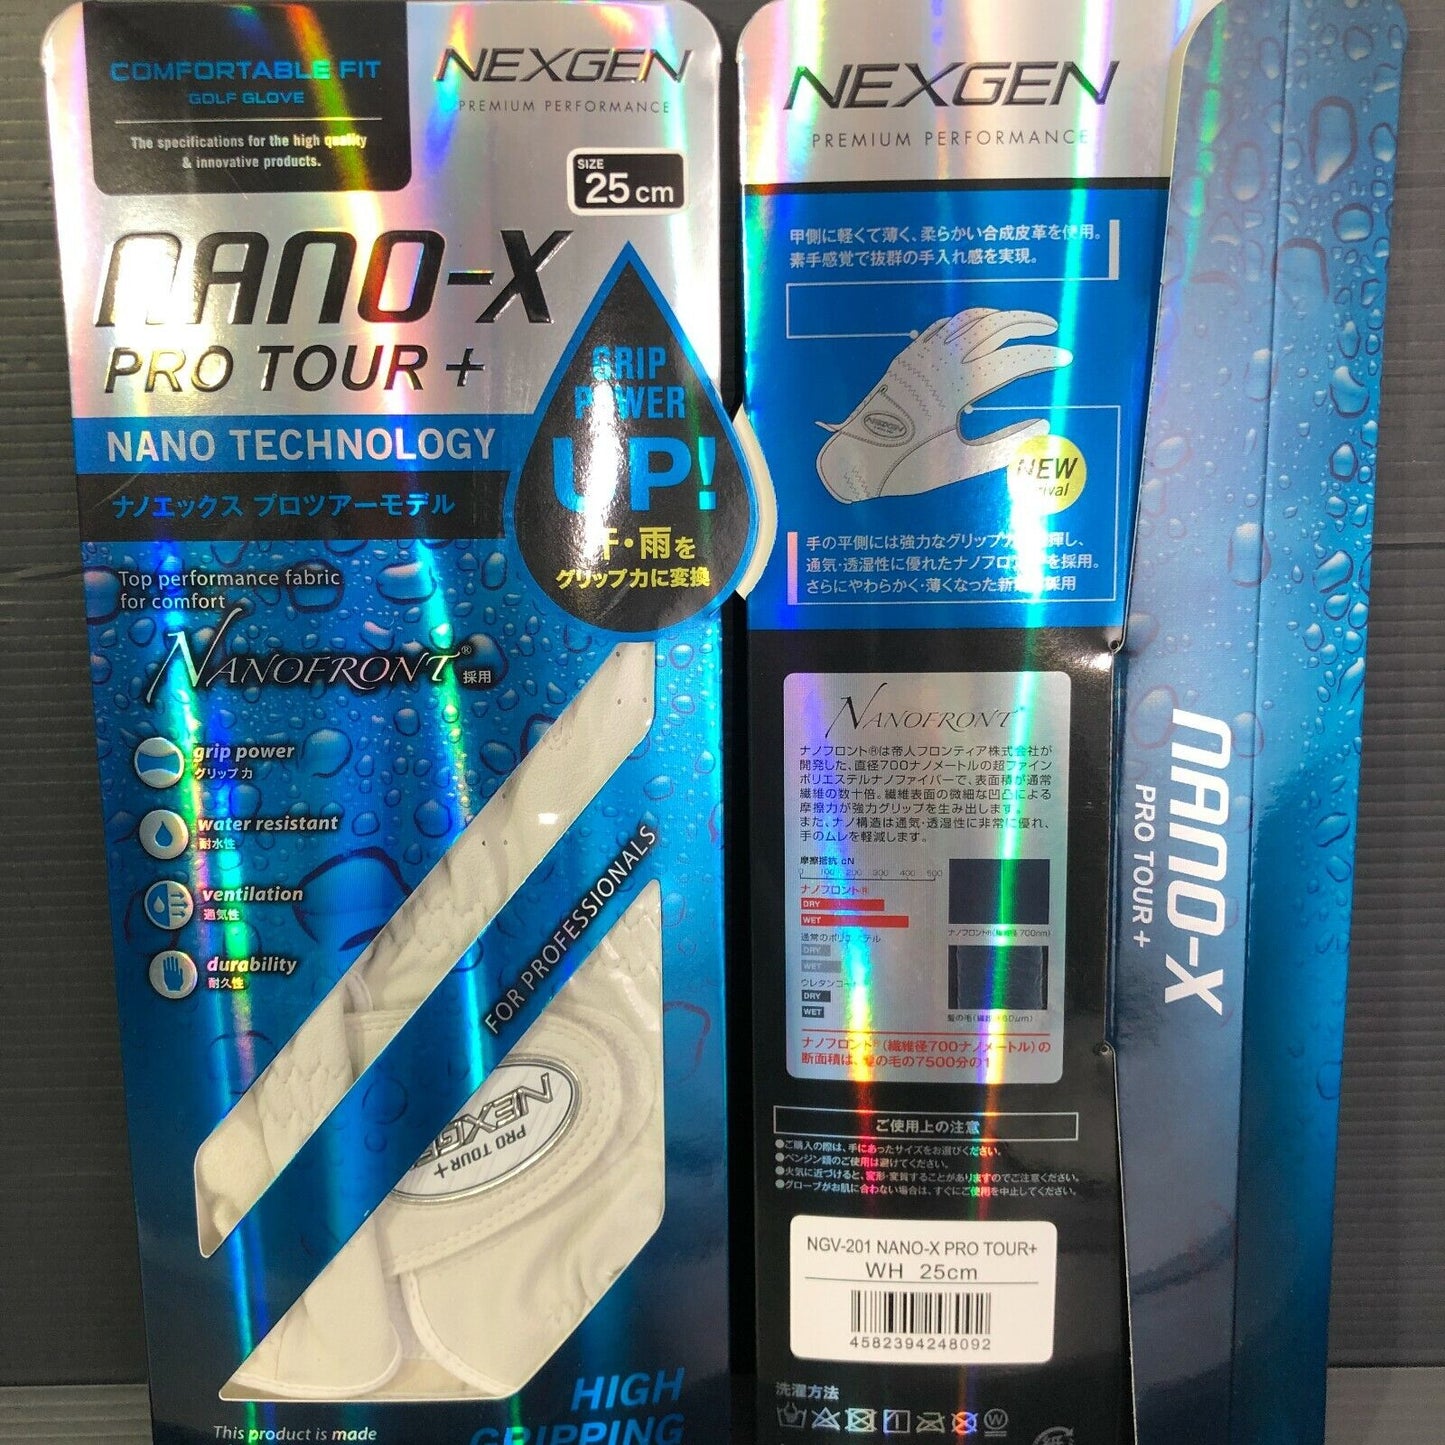 NEXGEN NGV-201 GOLF Glove Nano X Pro Tour +, New Model! GN001N